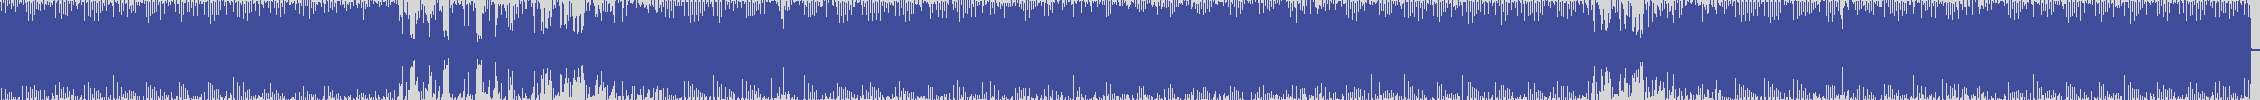 vitti_records [VIT010] Little C - C-adricek [Original Mix] audio wave form